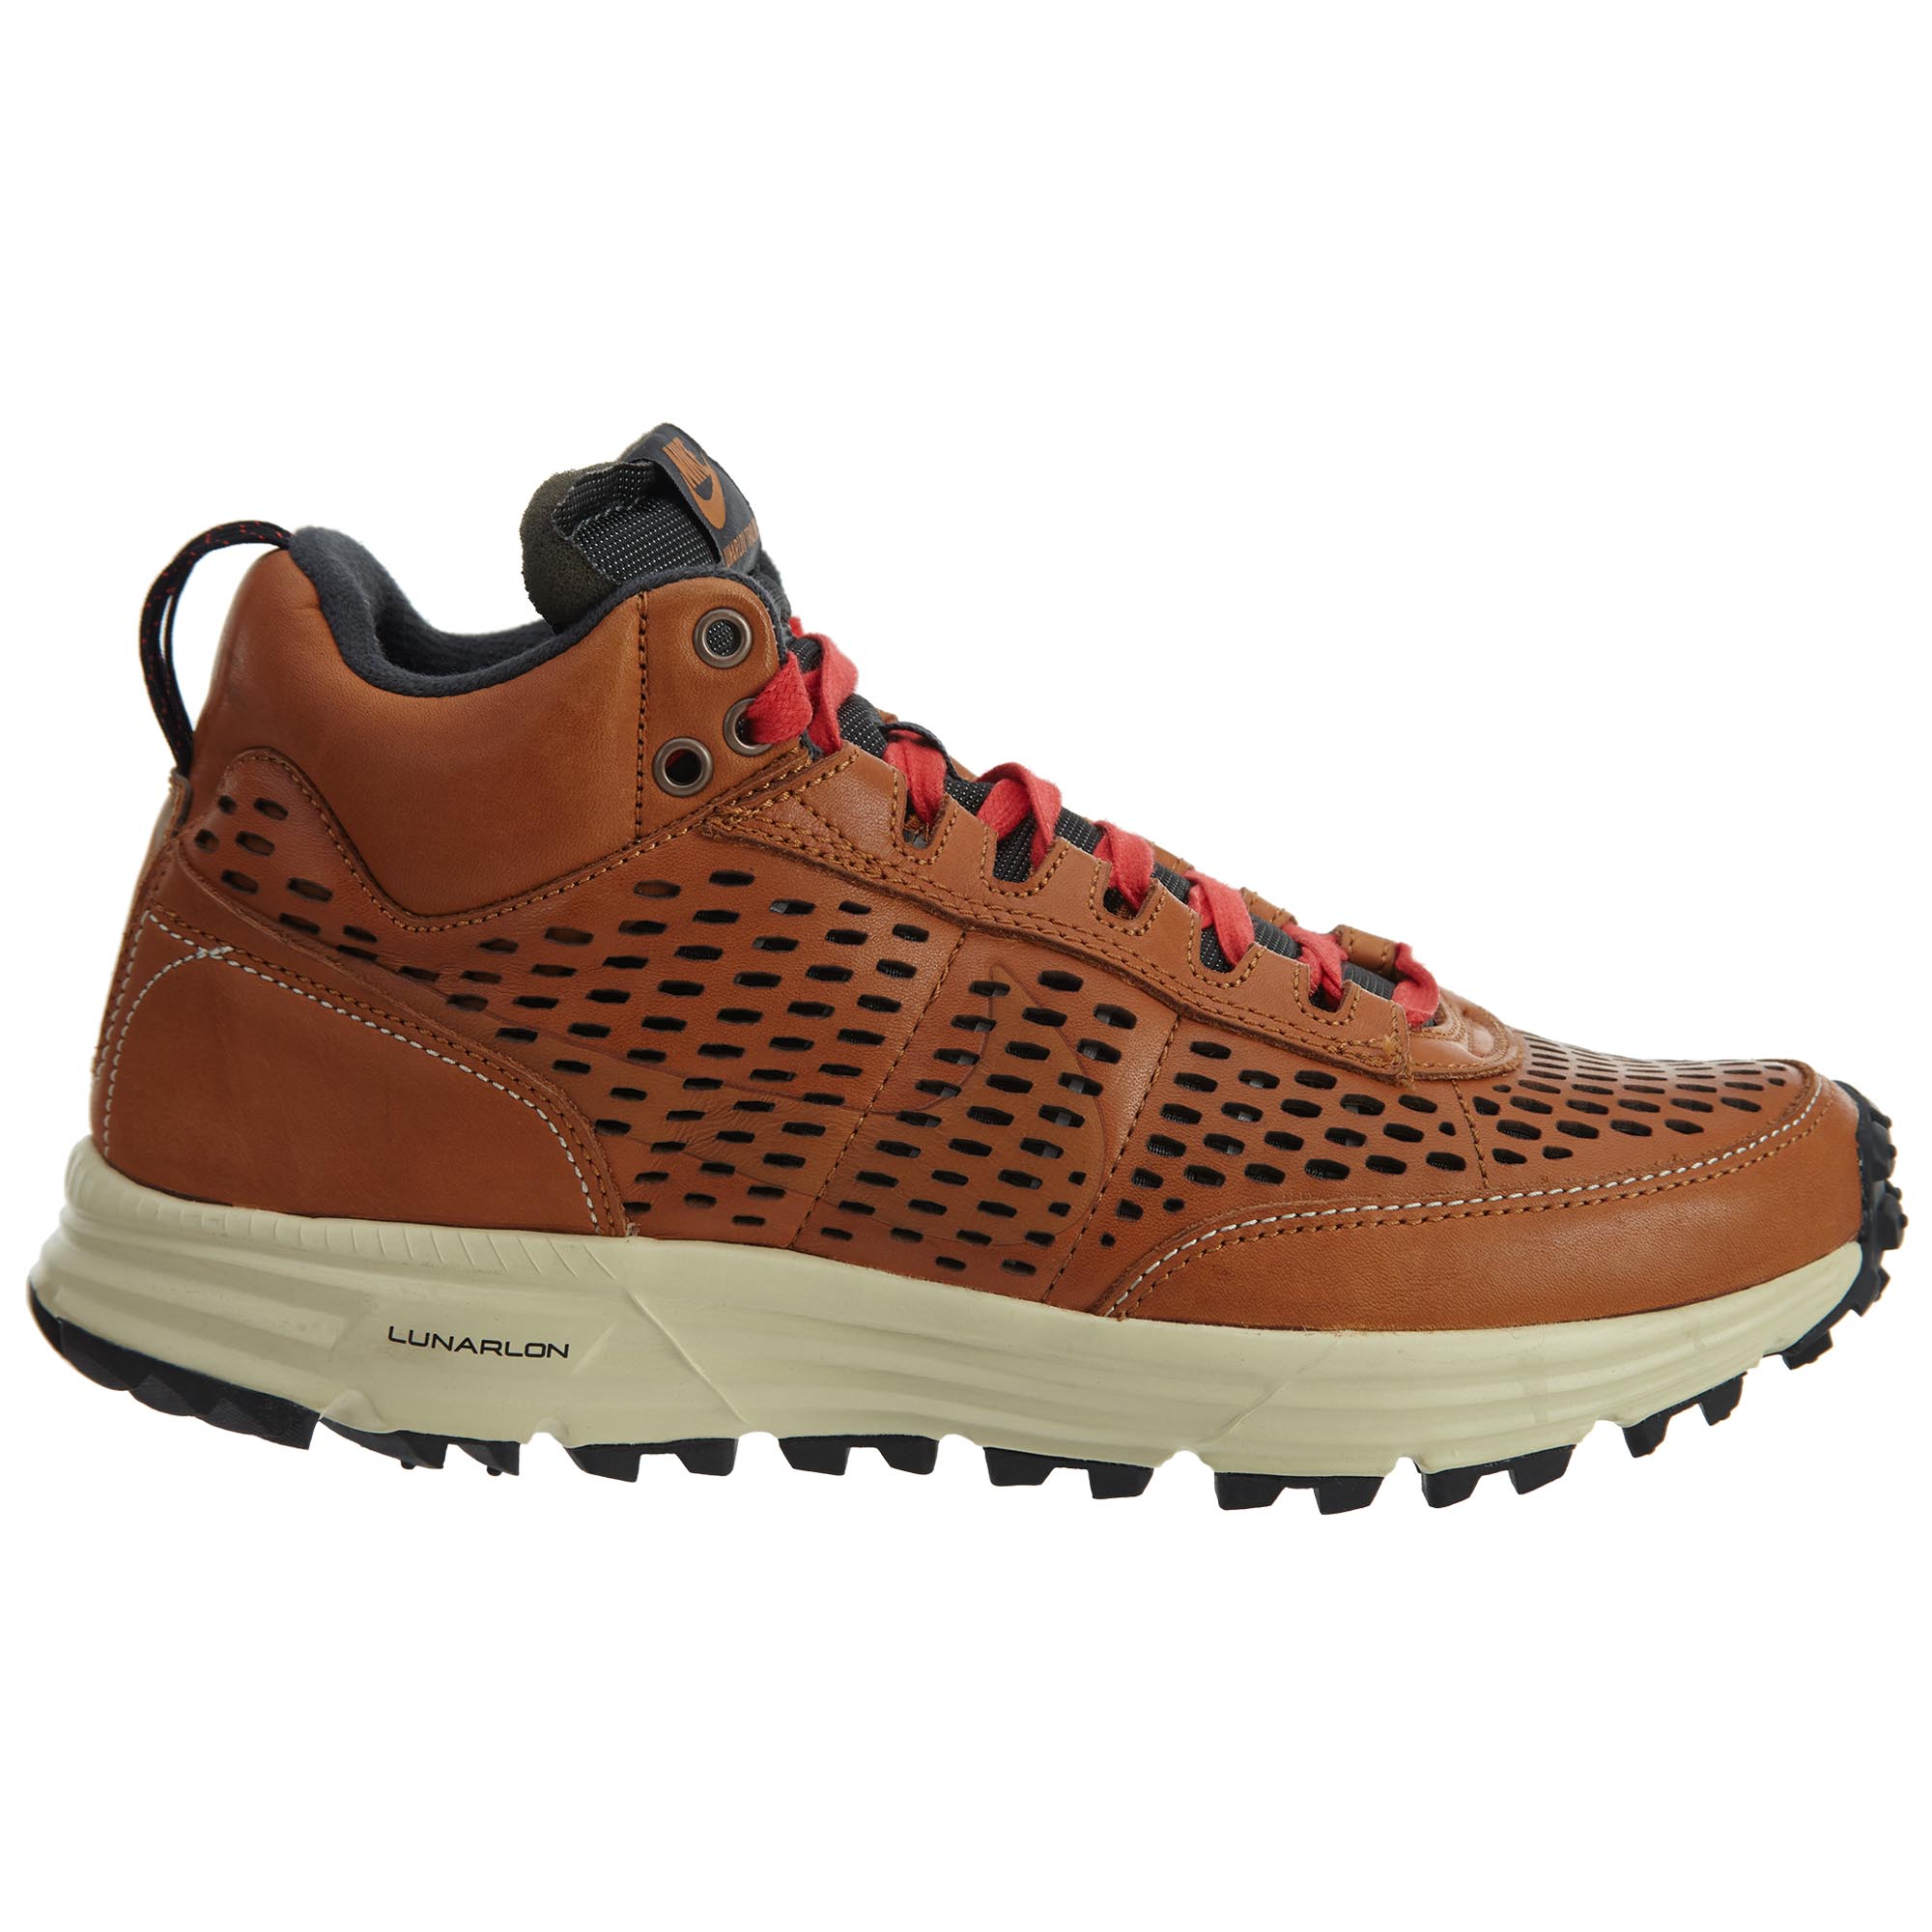 Nike Lunar Ldv Sneaker Boot Prm Qs 